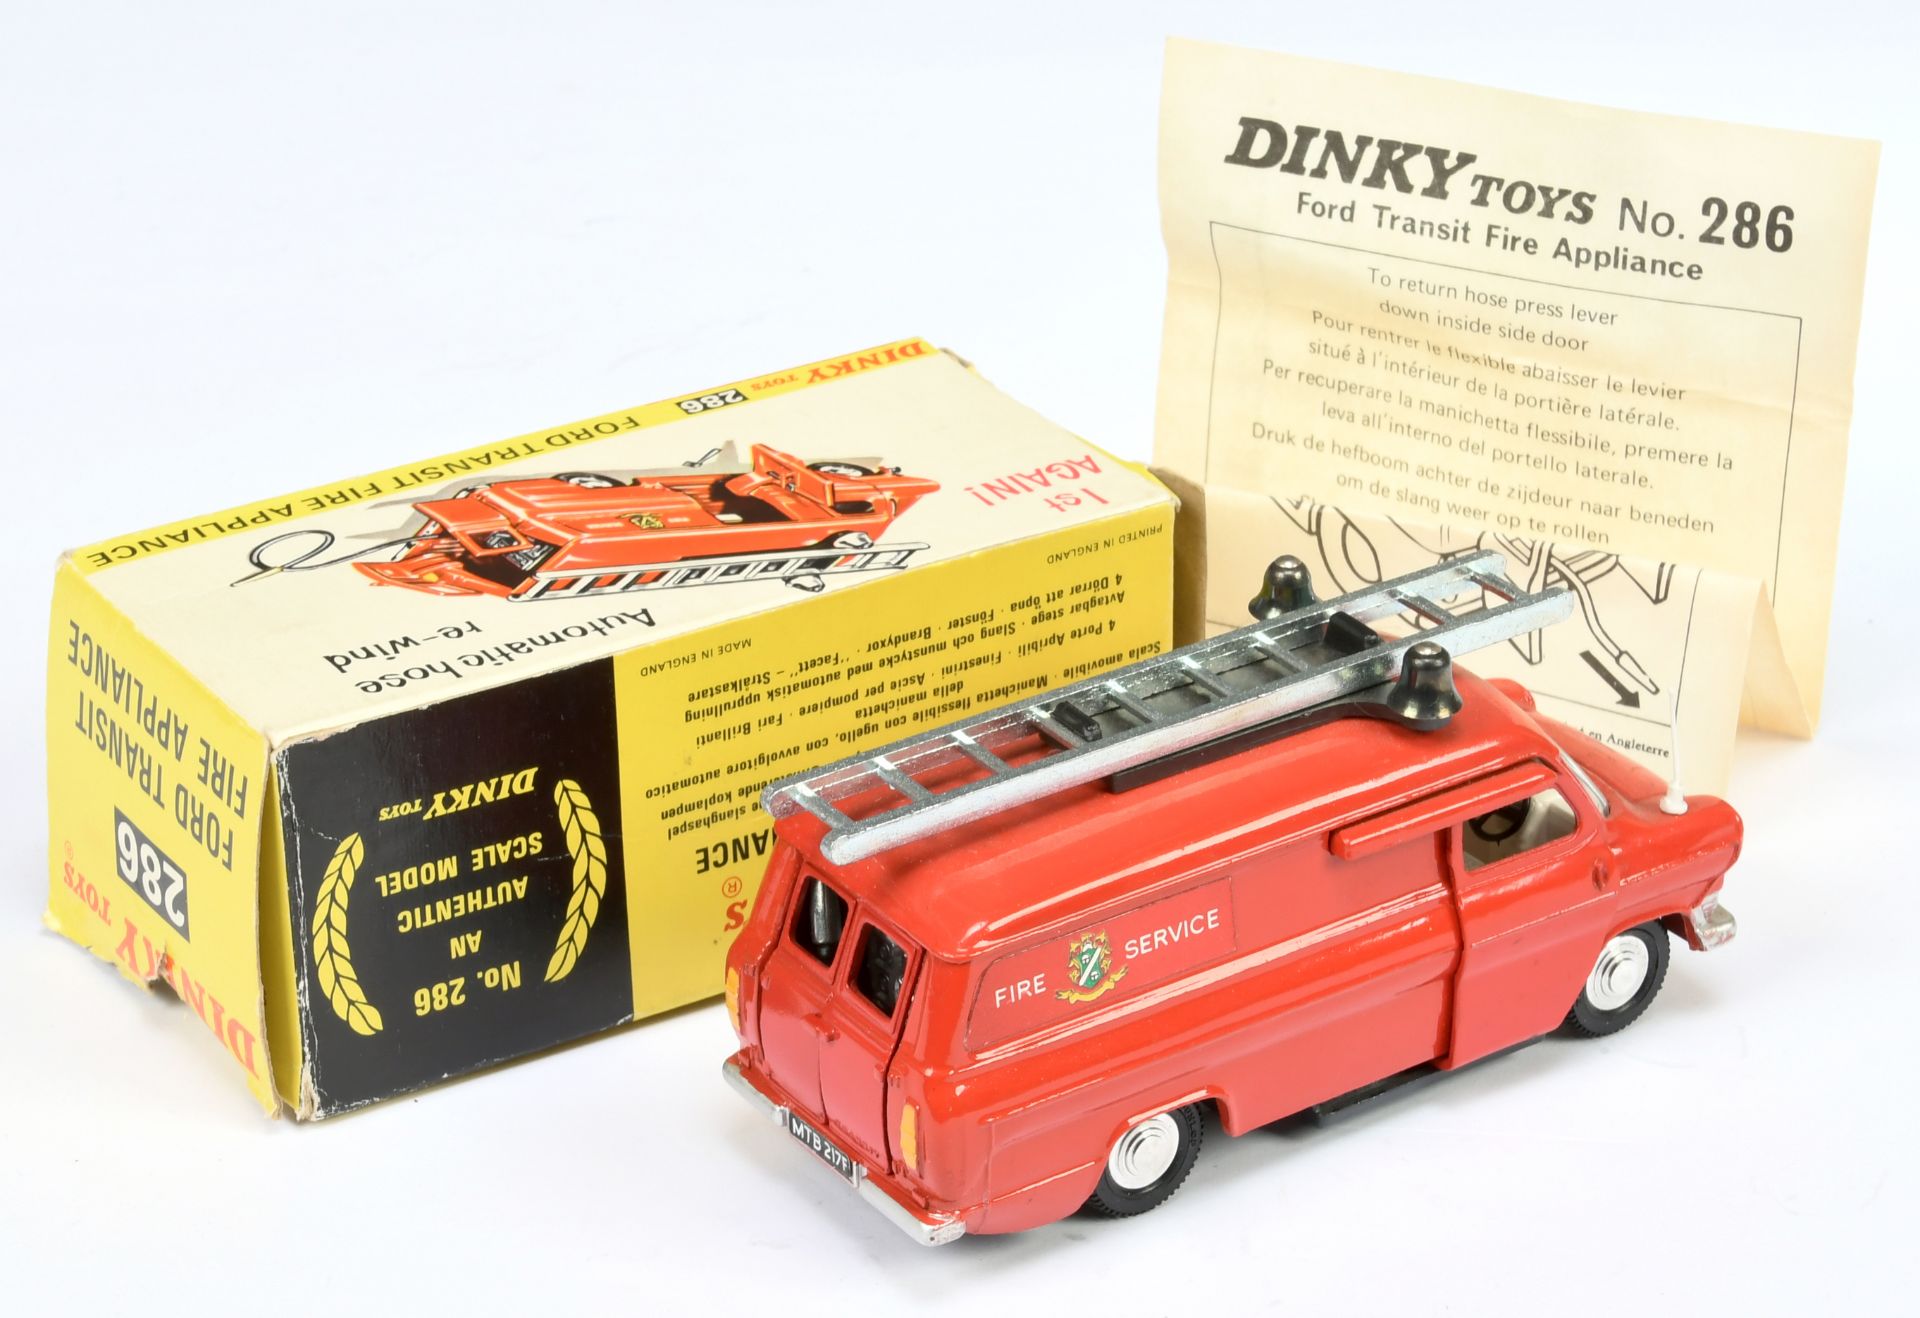 Dinky Toys 286 Ford Transit Fire Appliance "Fire Service" - Red body, Dark grey base, off white i... - Bild 2 aus 2